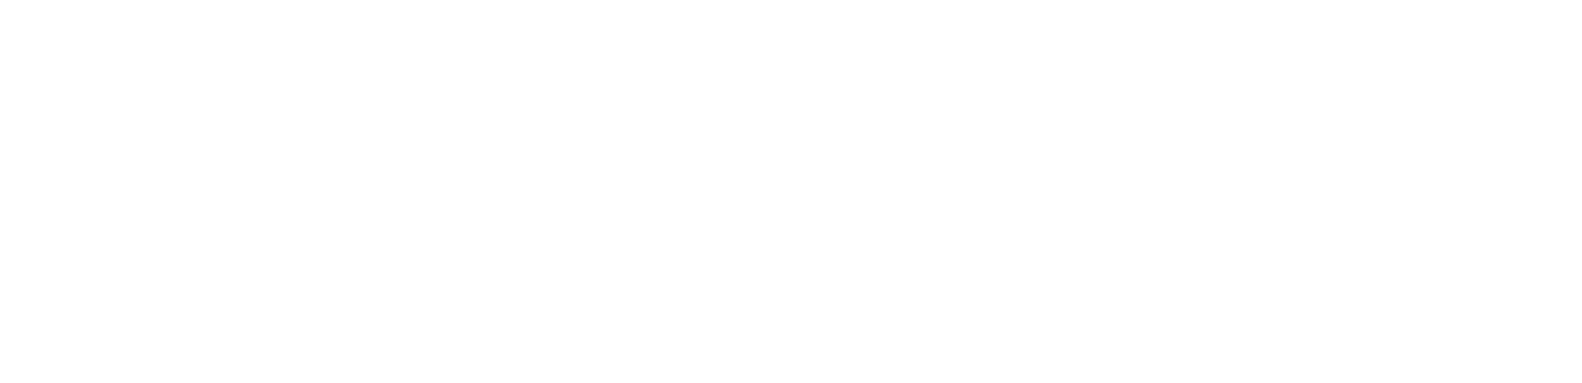 BillerudKorsnäs logo grand pour les fonds sombres (PNG transparent)